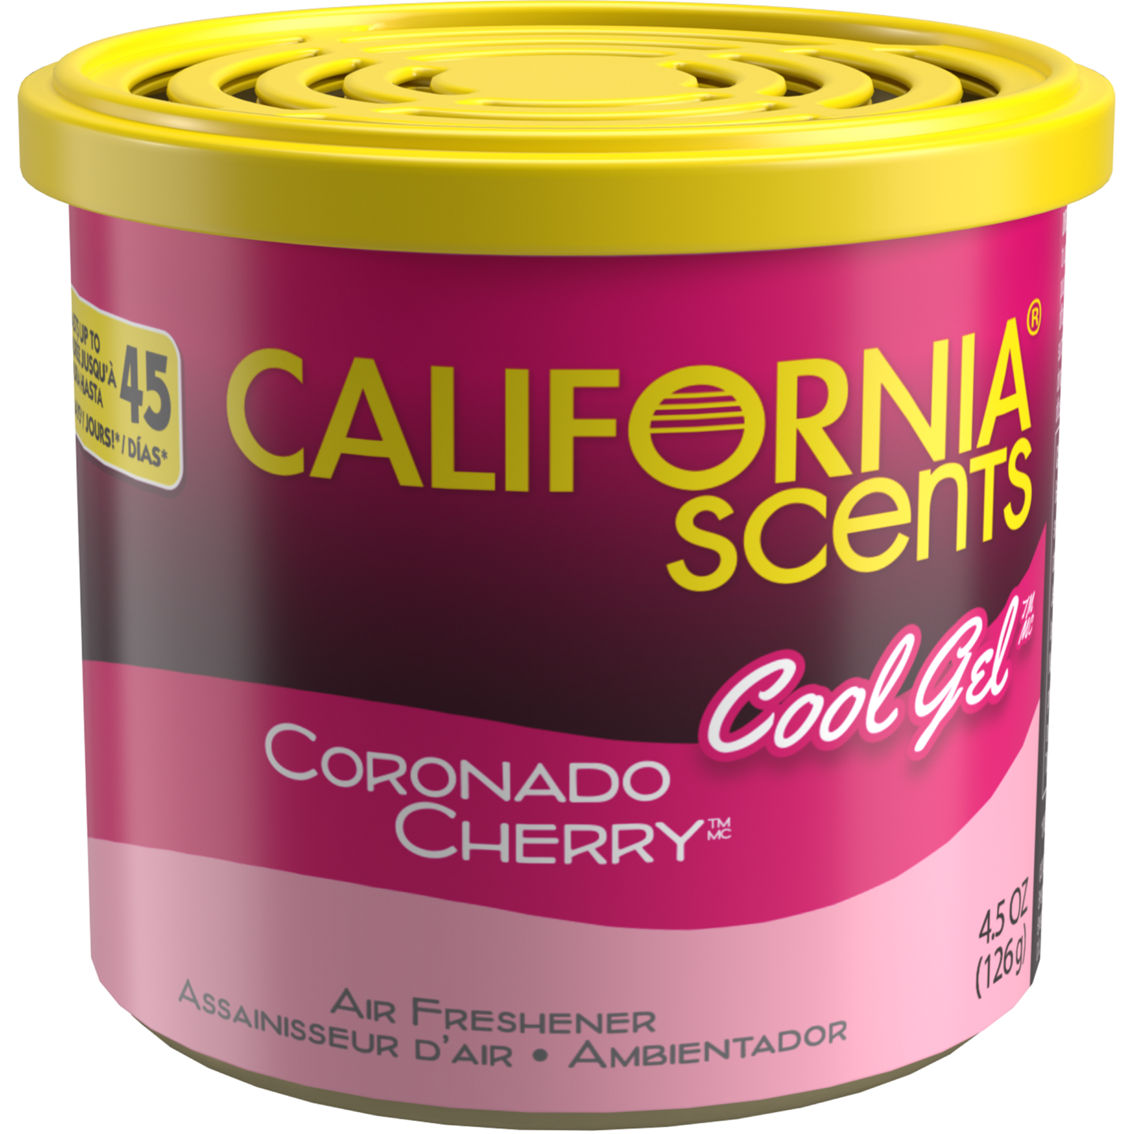 California Scents Spillproof Can Air Freshener, Coronado Cherry, 4.5 Oz., Air Fresheners, Household